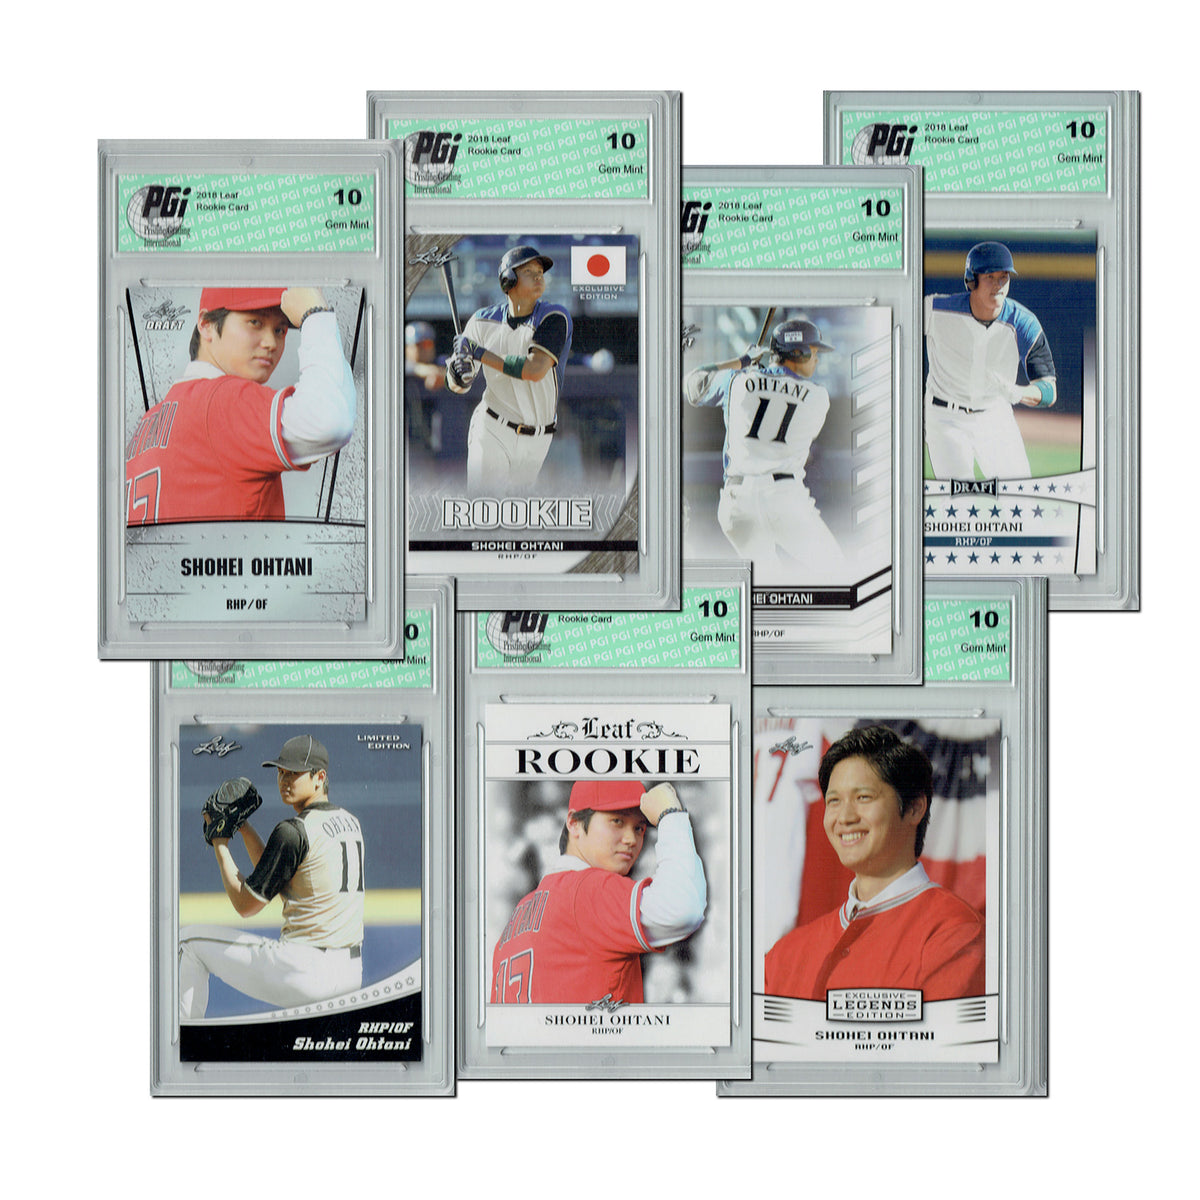 SHOHEI OHTANI 2018 Leaf Limited Edition Rookie Baseball Card LE-01